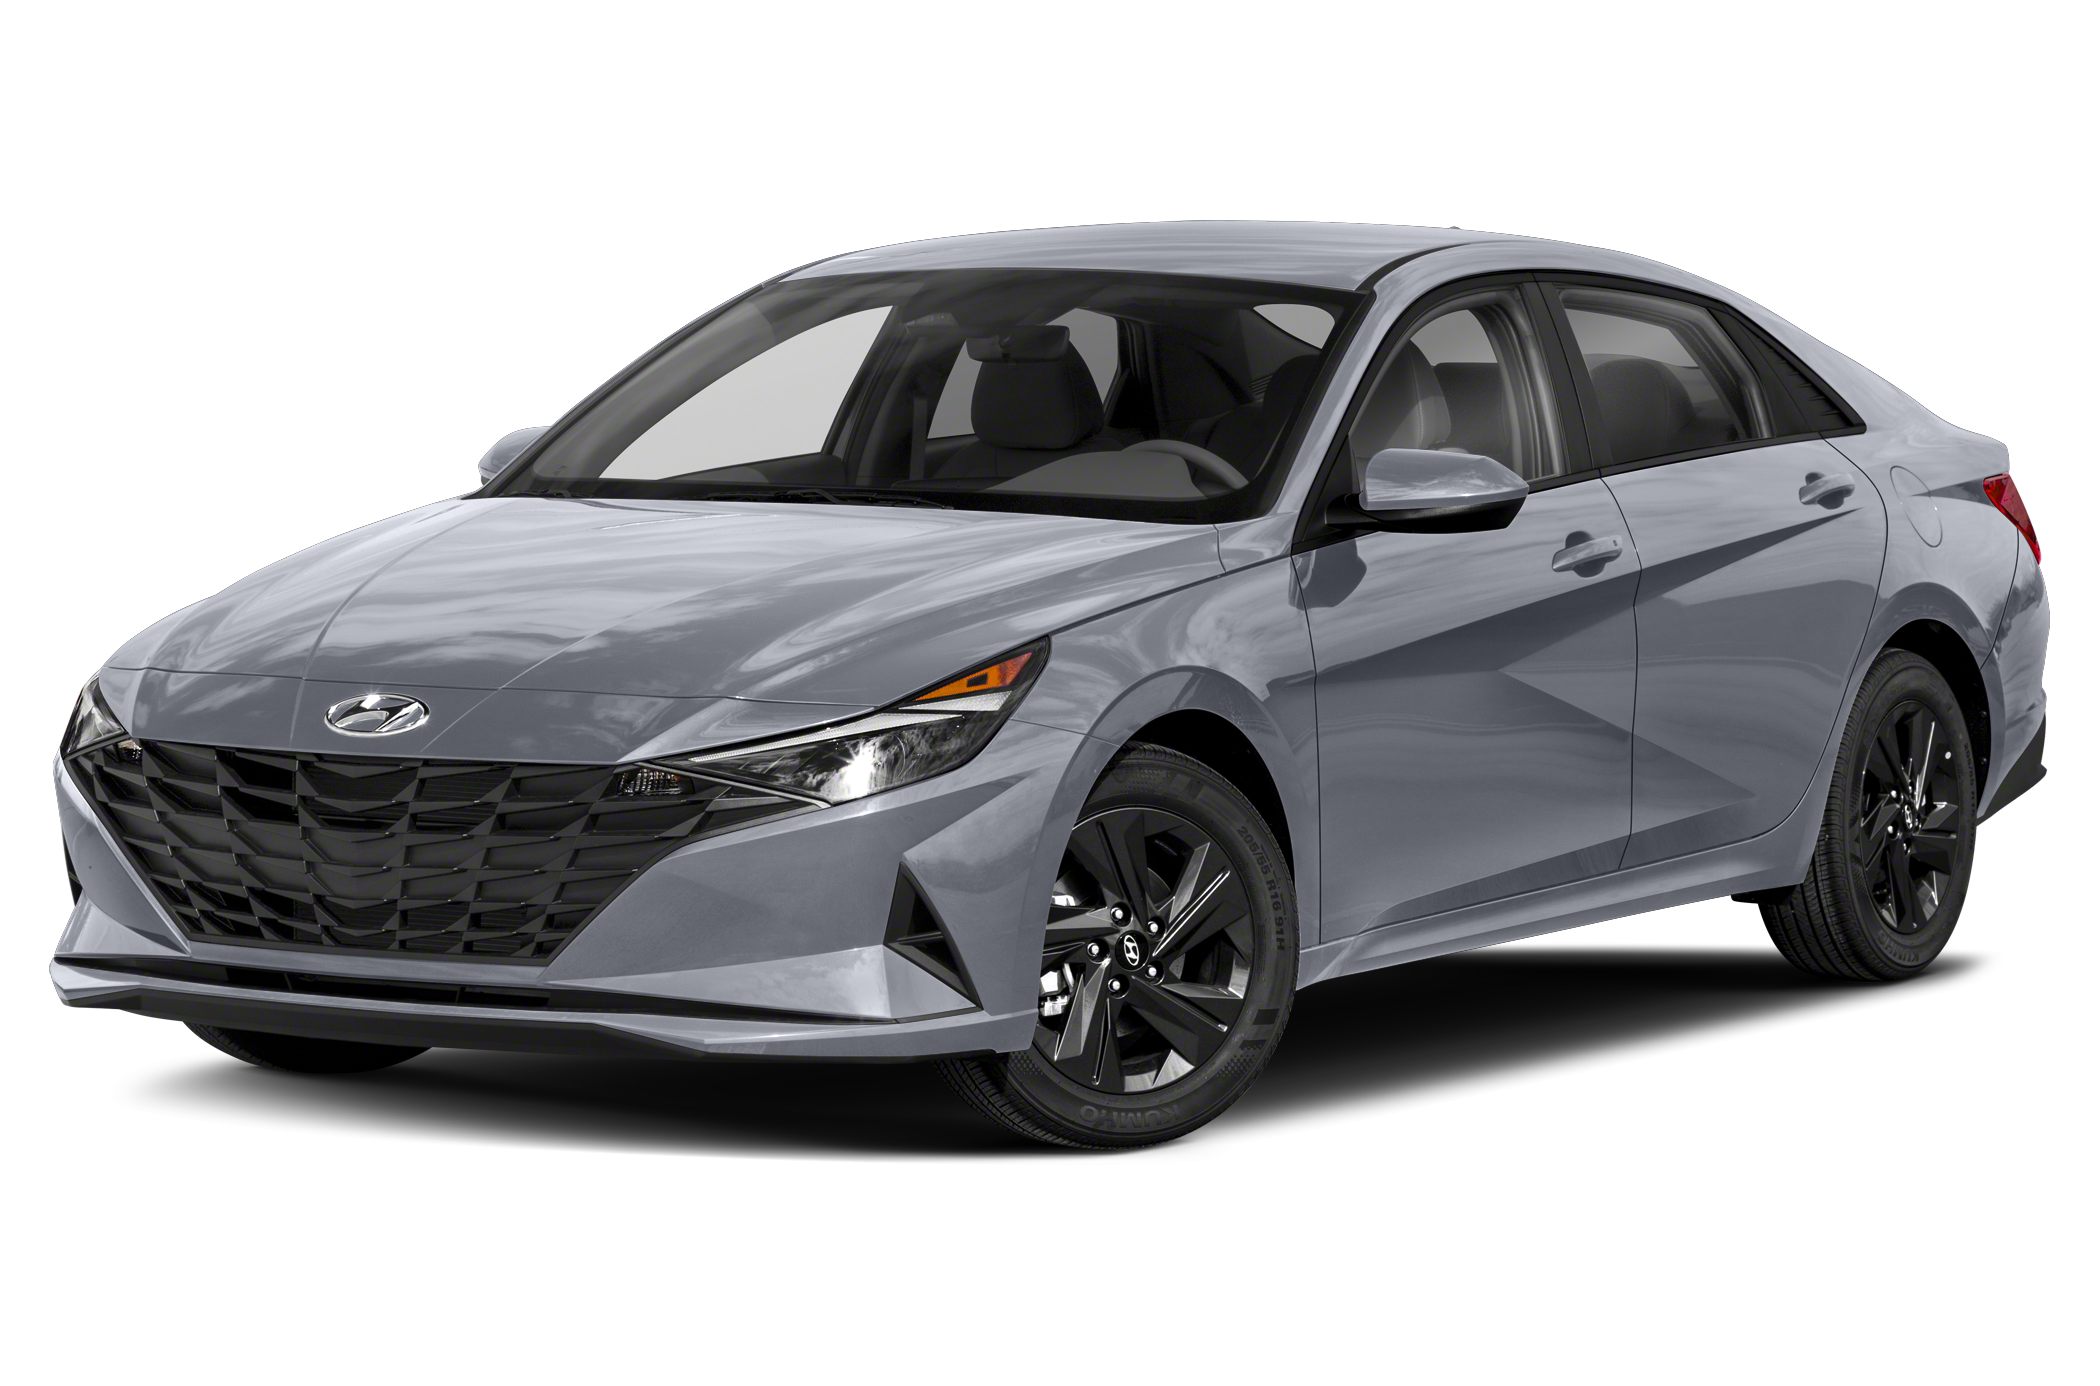 2021 Hyundai Elantra Sel 4dr Sedan Pricing And Options